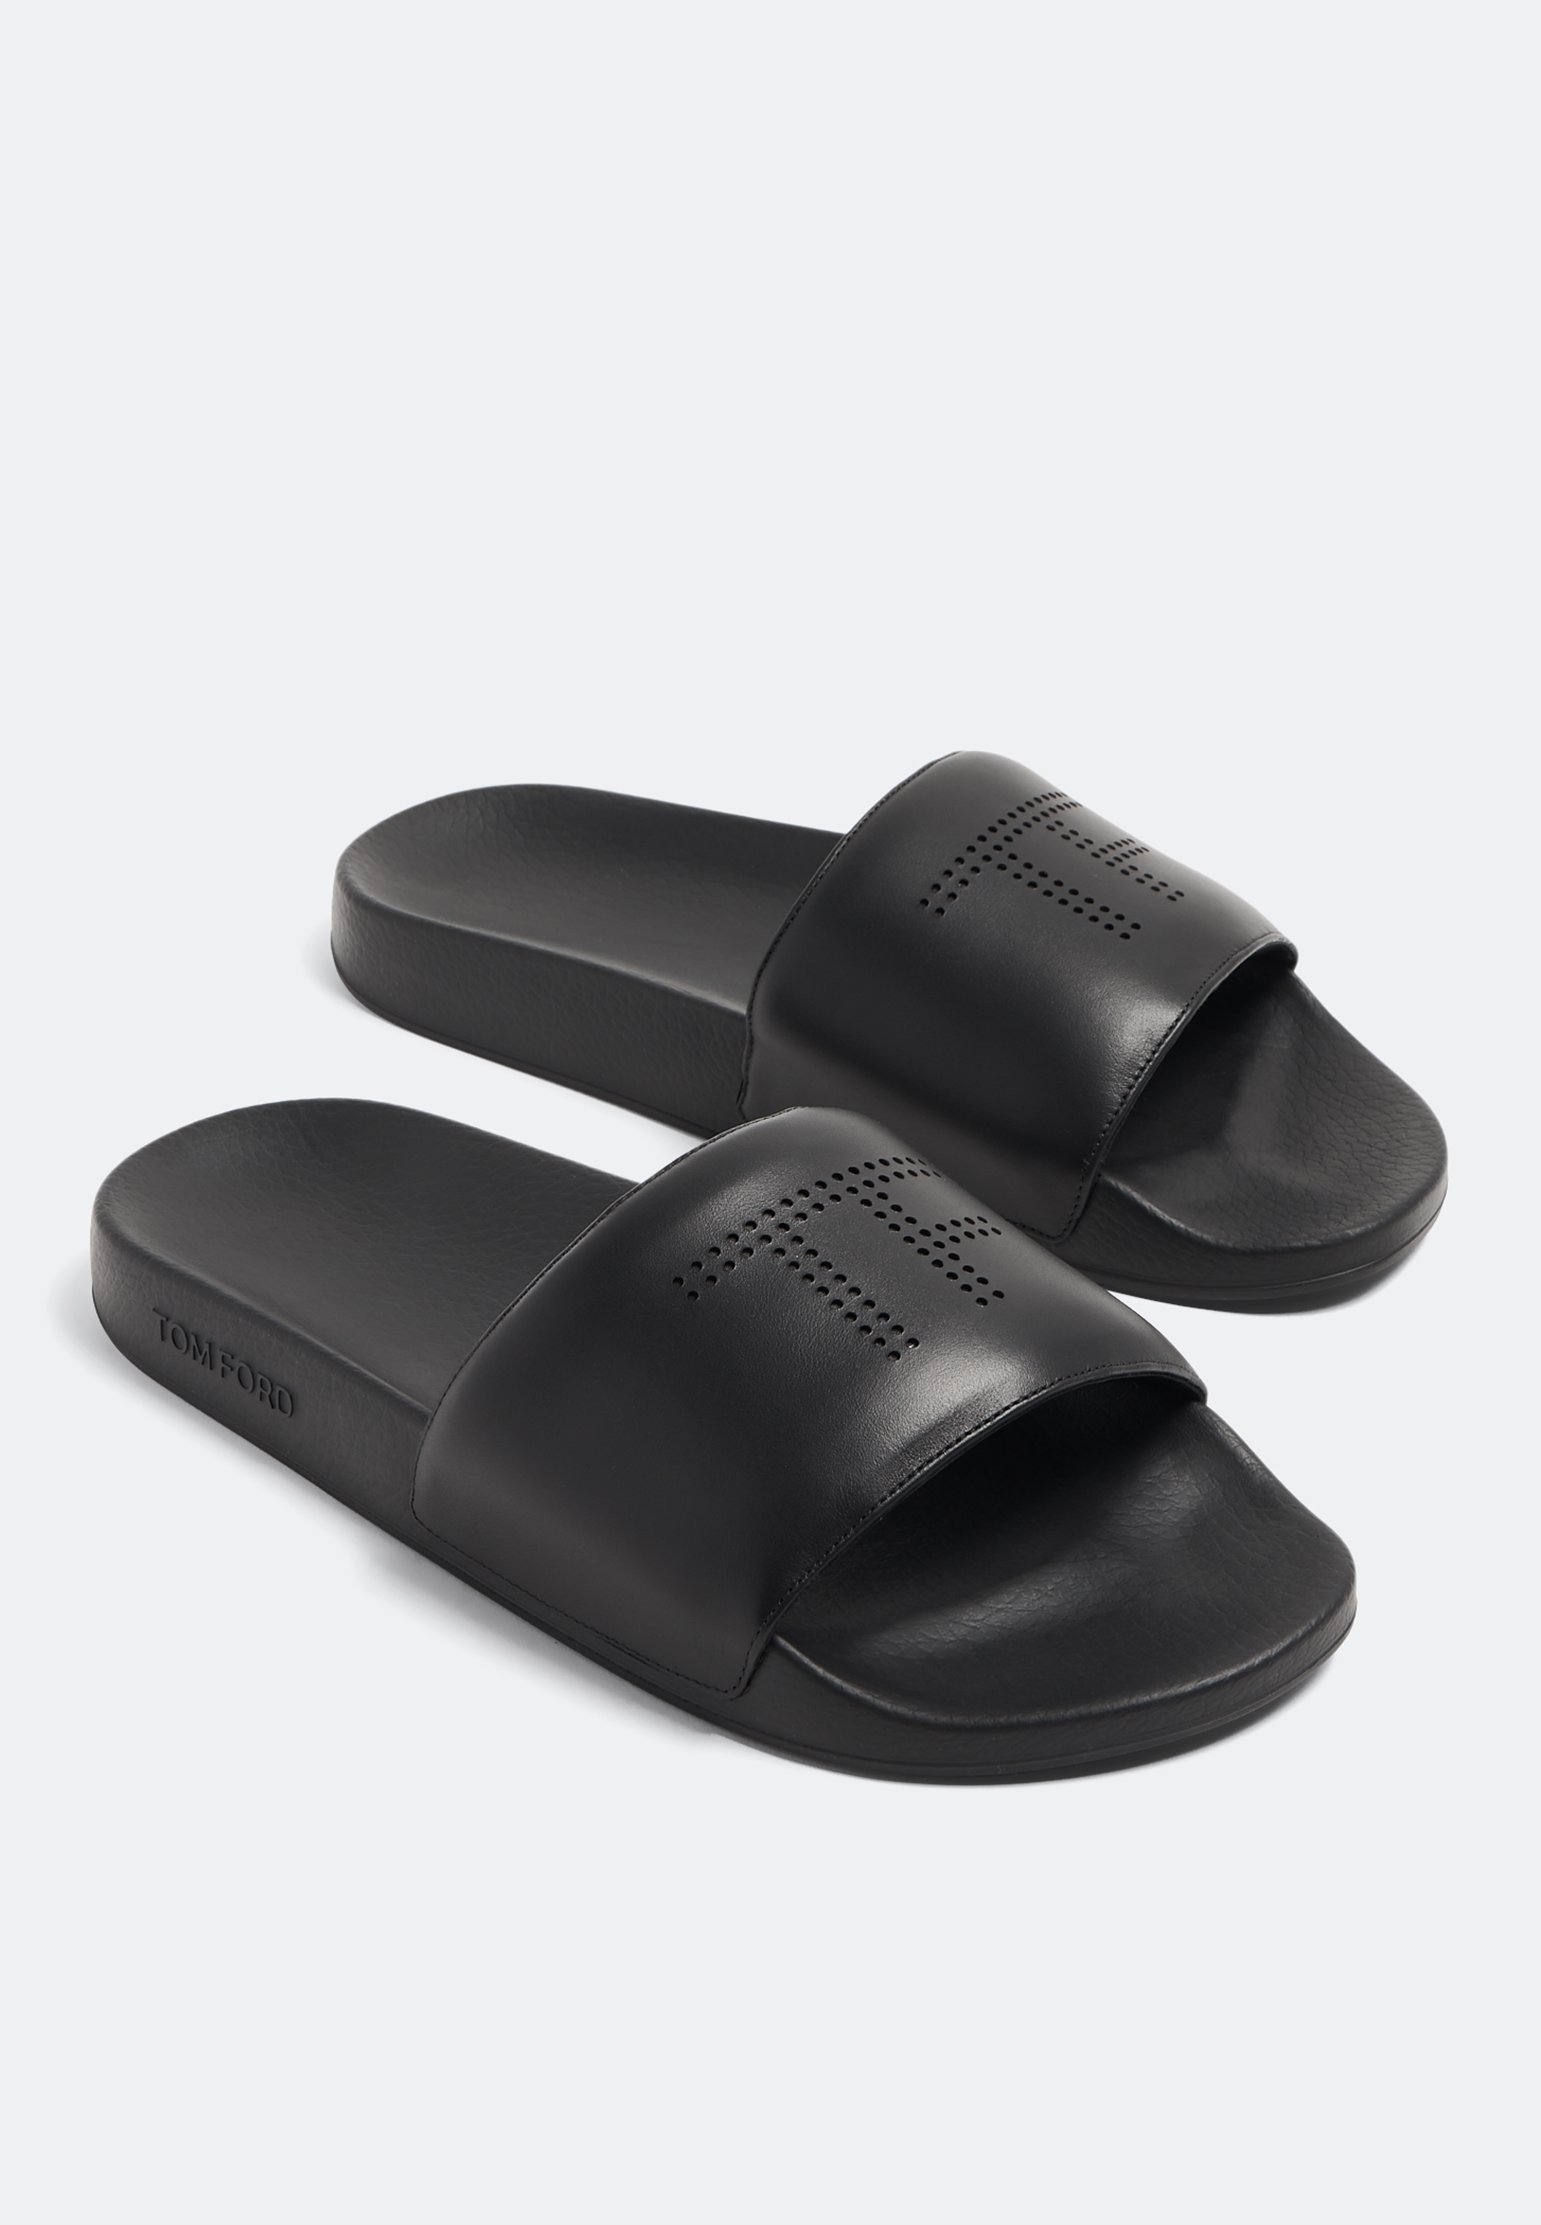 Sandals TOM FORD Color: black (Code: 3015) in online store Allure